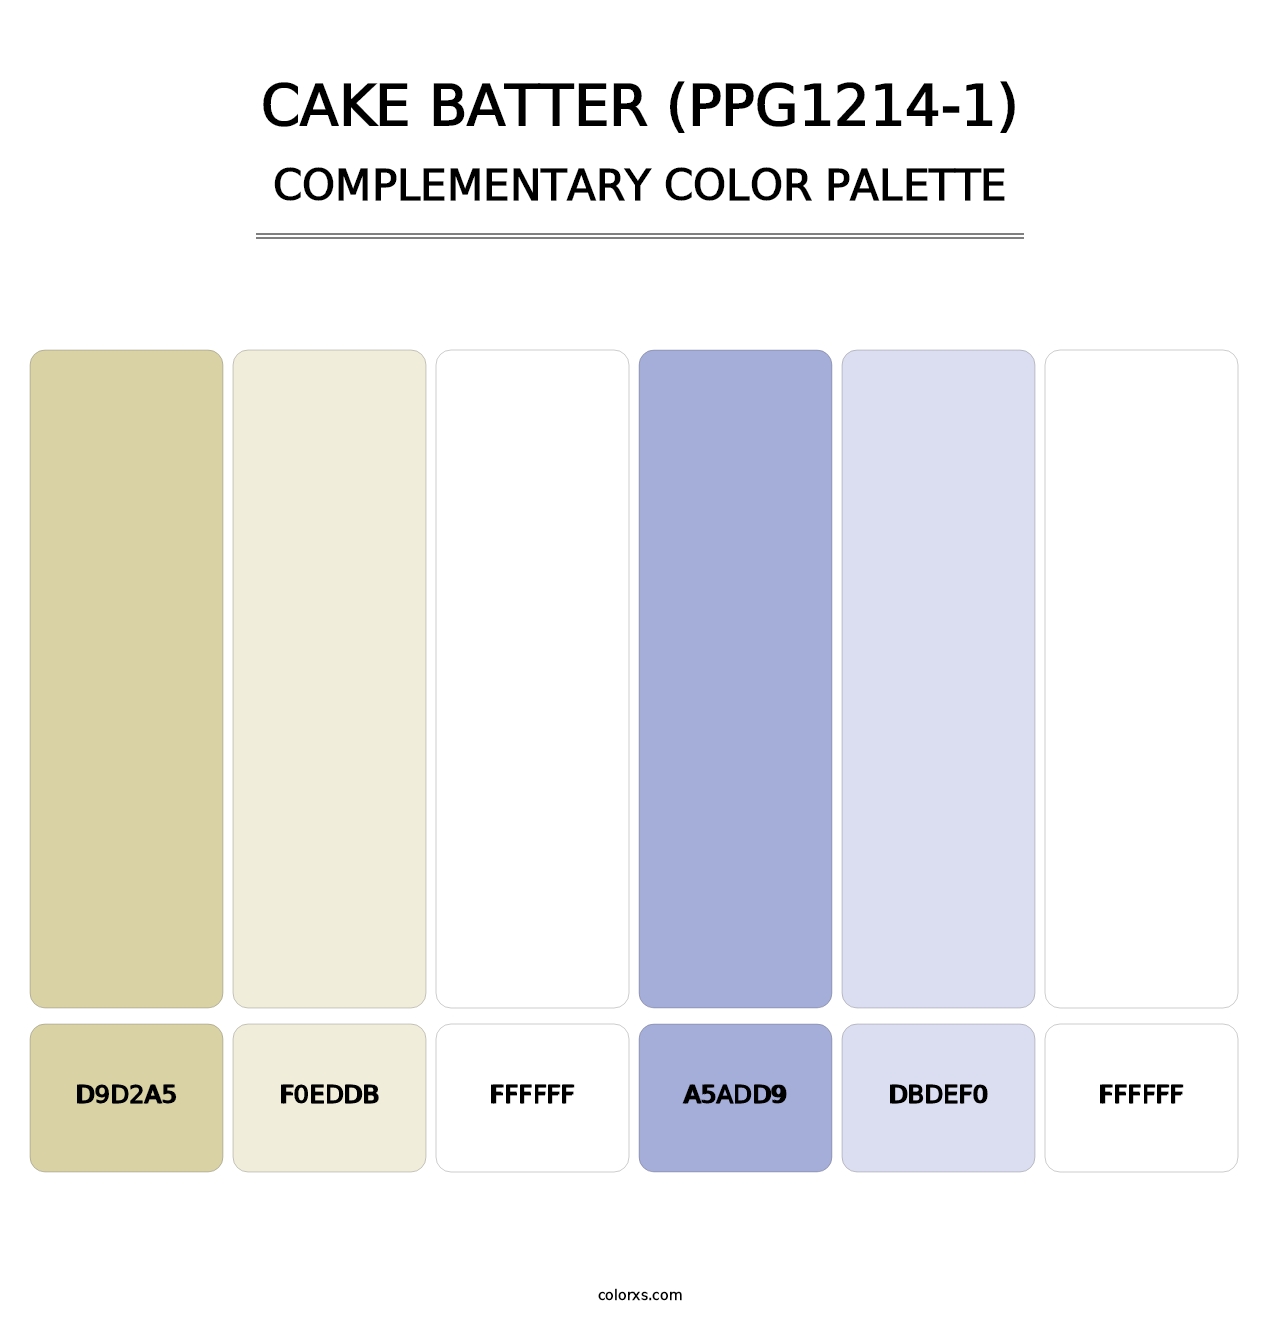 Cake Batter (PPG1214-1) - Complementary Color Palette